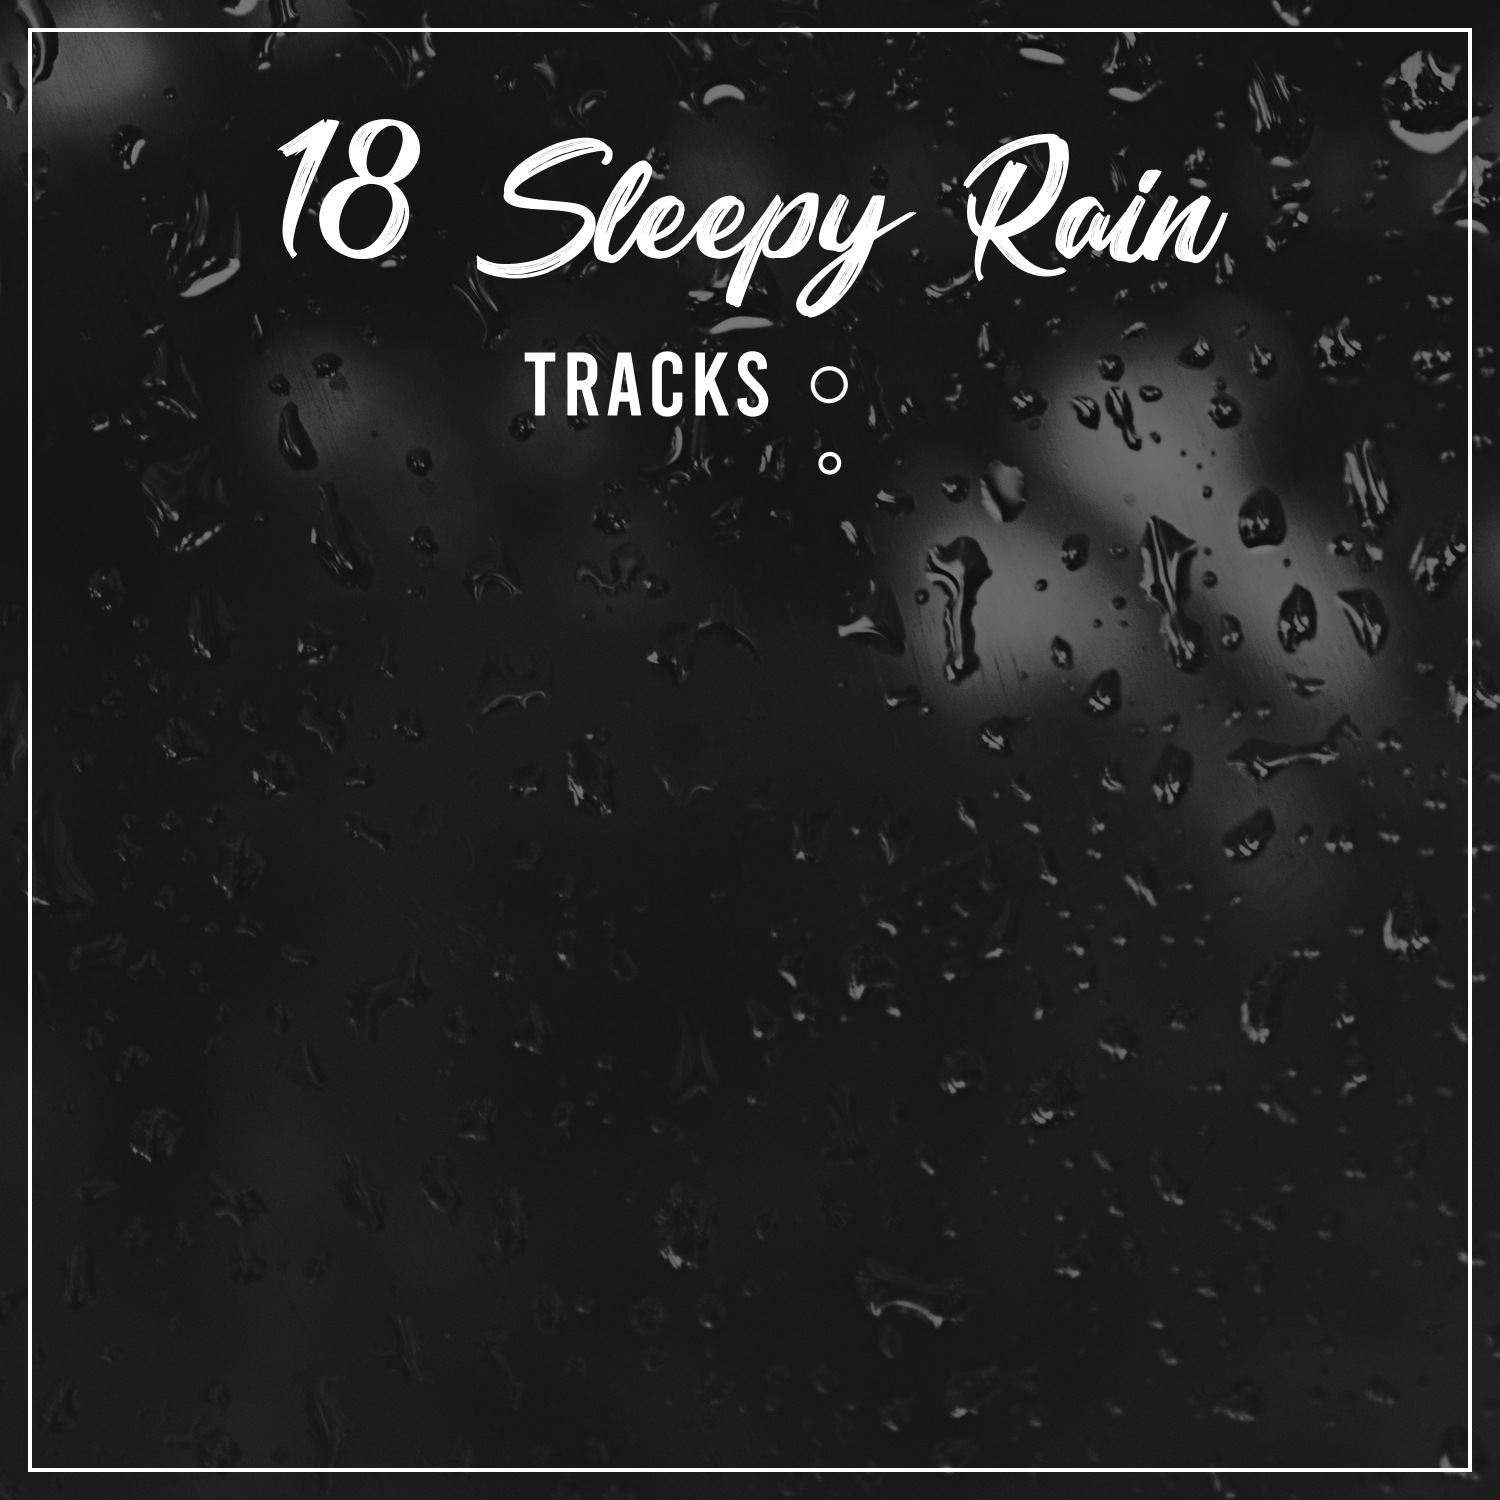 18 Sleepy Rain Tracks - A Meditative Guide and Sleep Aid